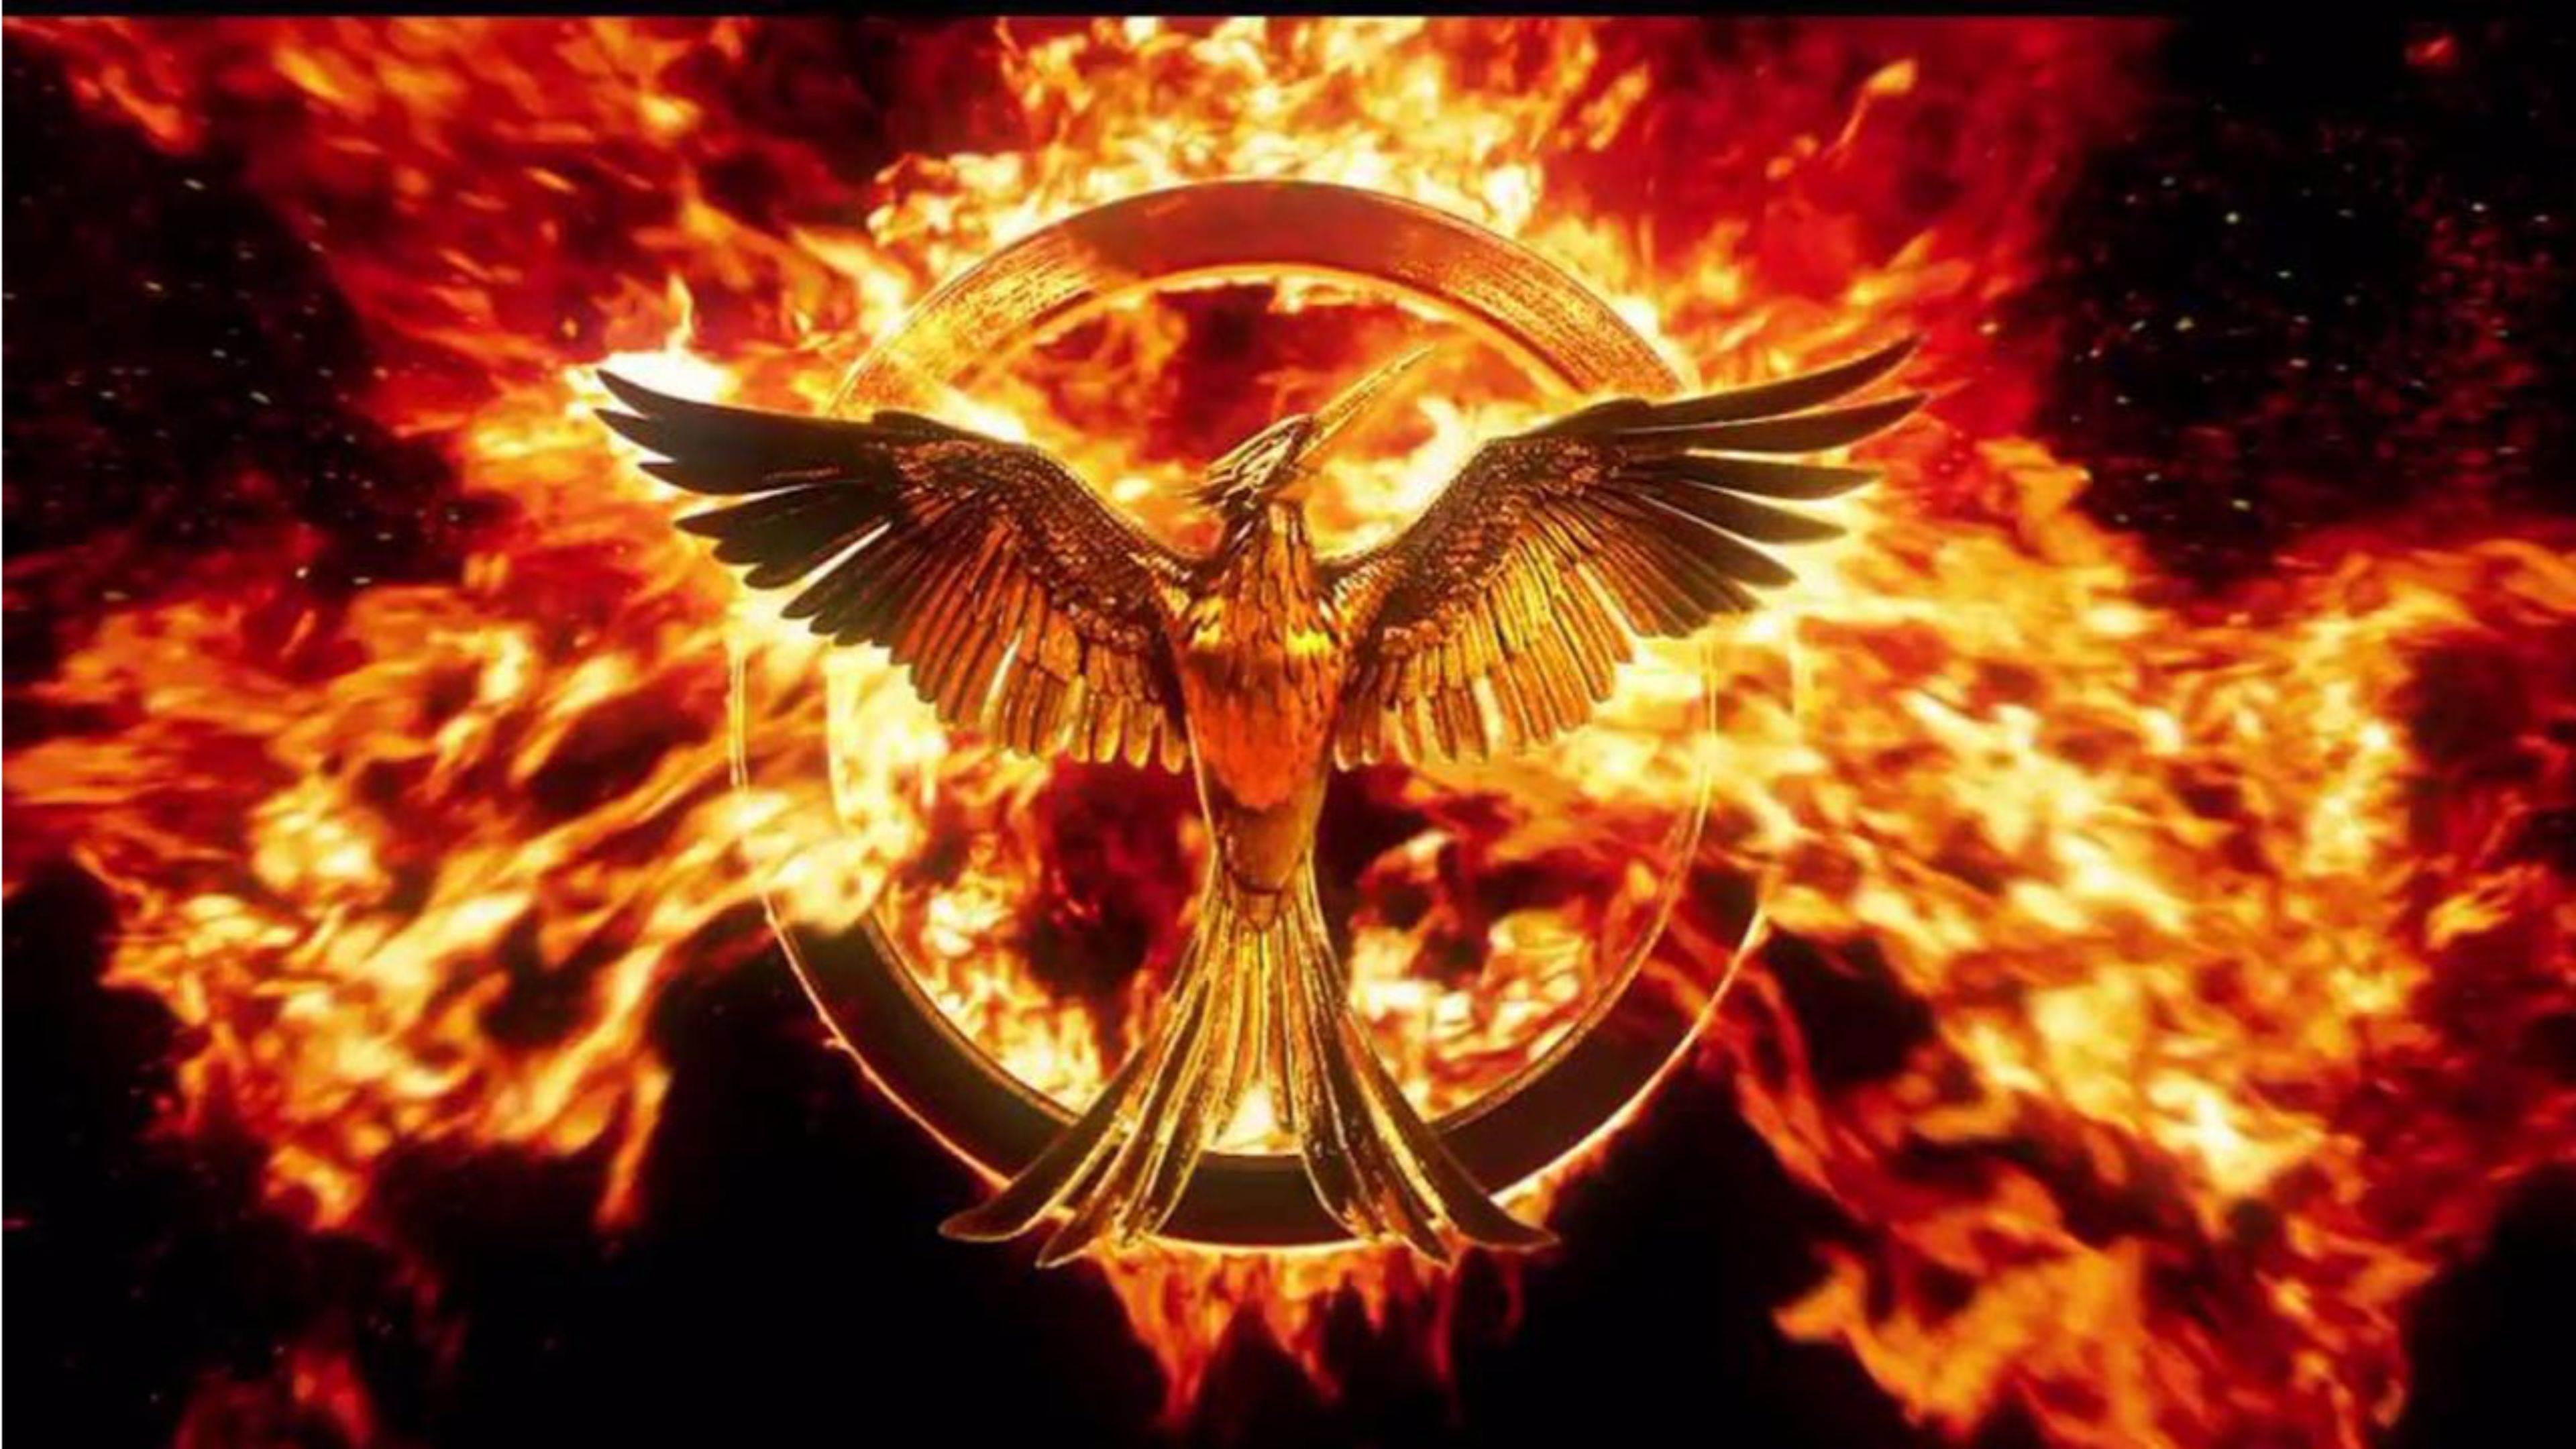  The Hunger Games Mockingjay Part 2 4K Wallpaper 4K Wallpaper 3840x2160